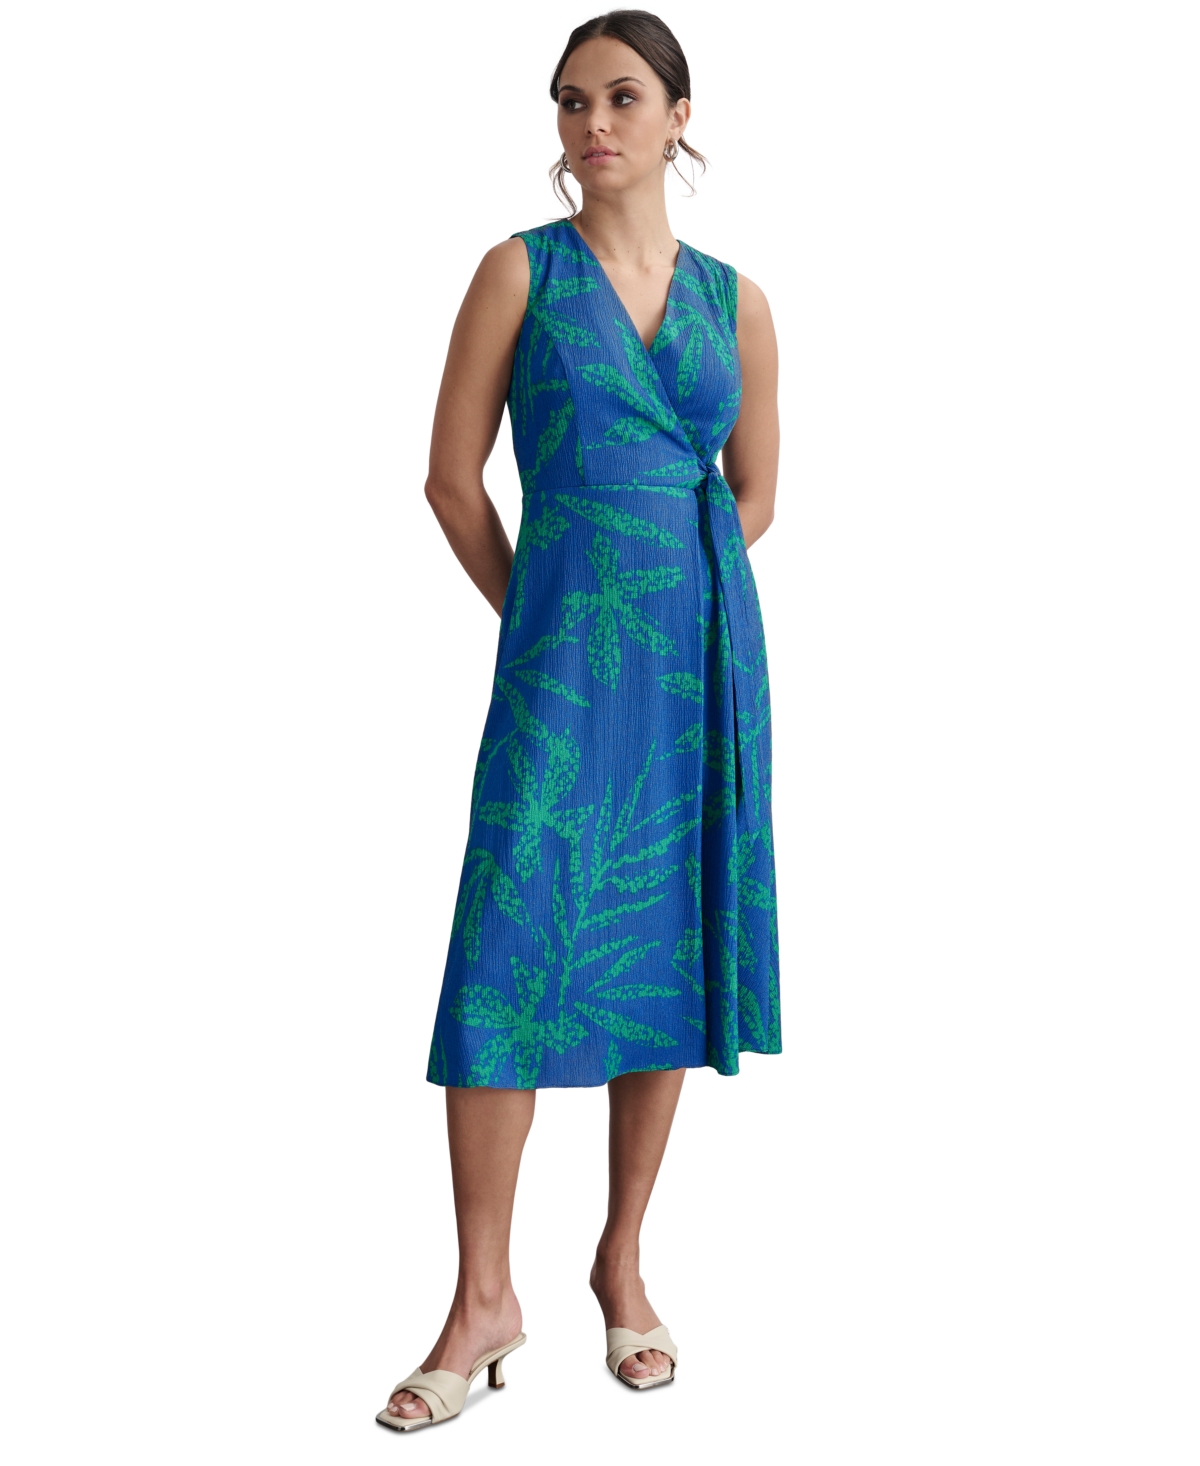 Women's Printed Side-Tie Sleeveless A-line Dress - Submerge Multi